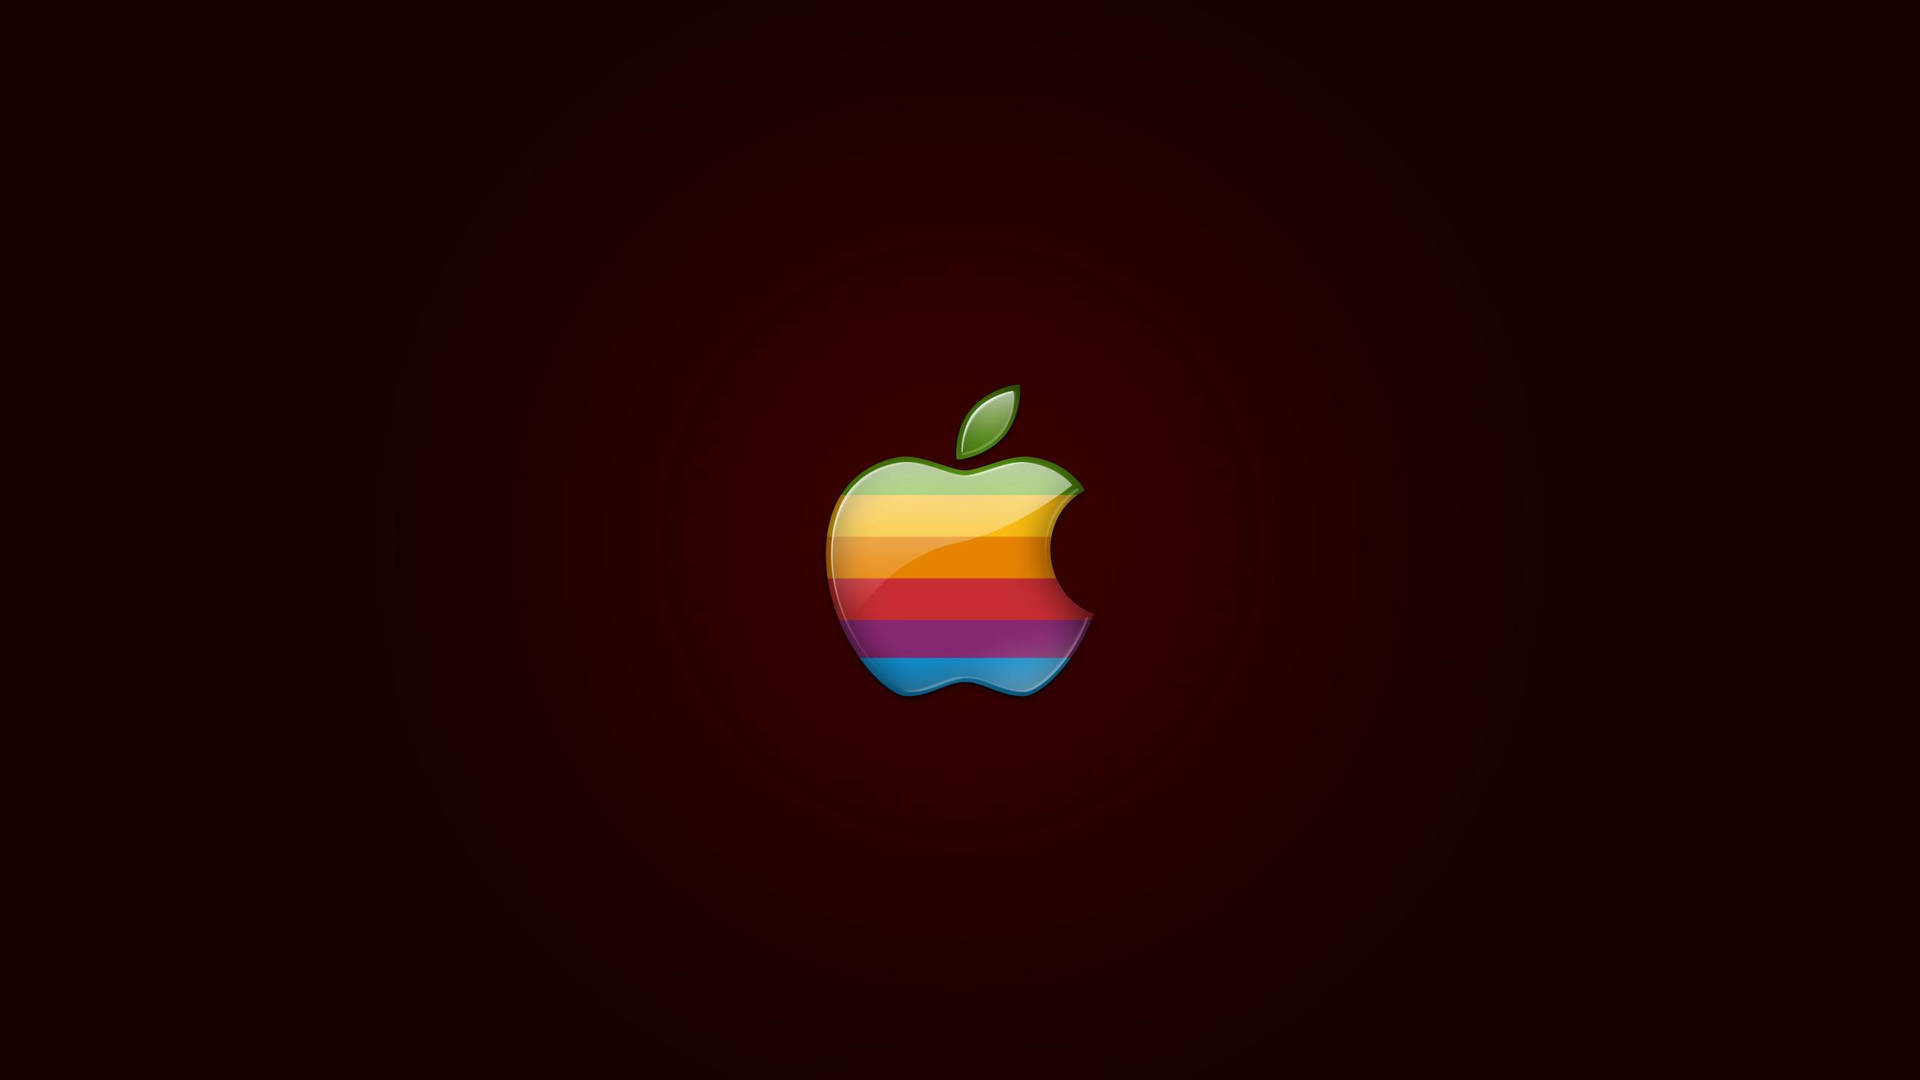 Apple Logo 4k In Rainbow